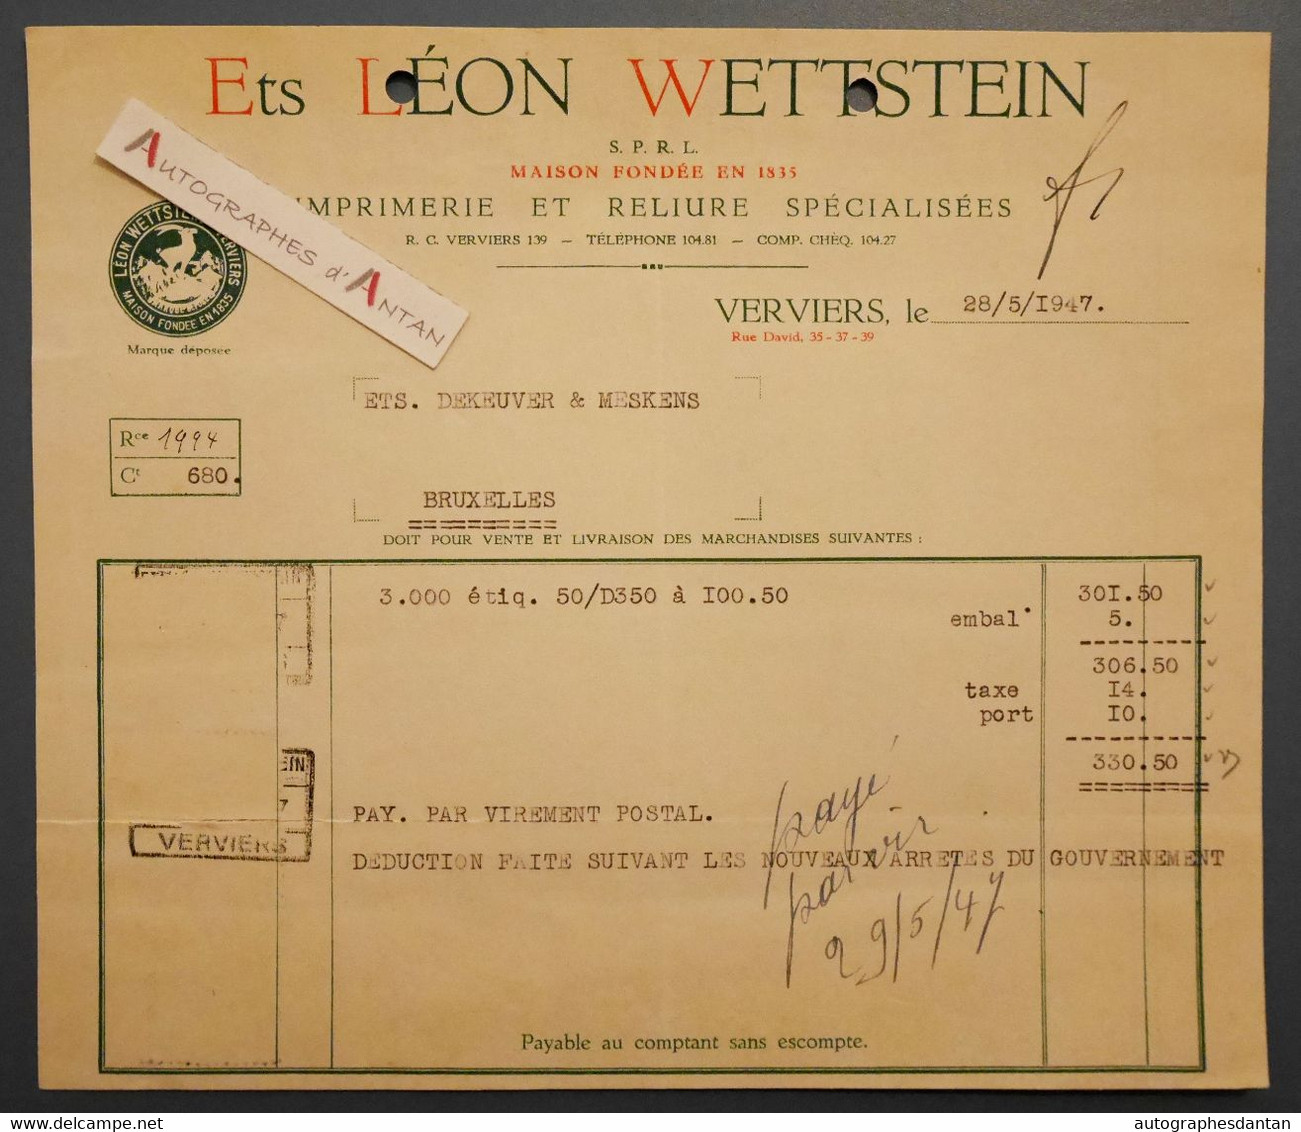 Léon WETTSTEIN Imprimerie & Reliure - VERVIERS - Facture 1947 > Ets Dekeuver Et Meskens - Belgique - Drukkerij & Papieren